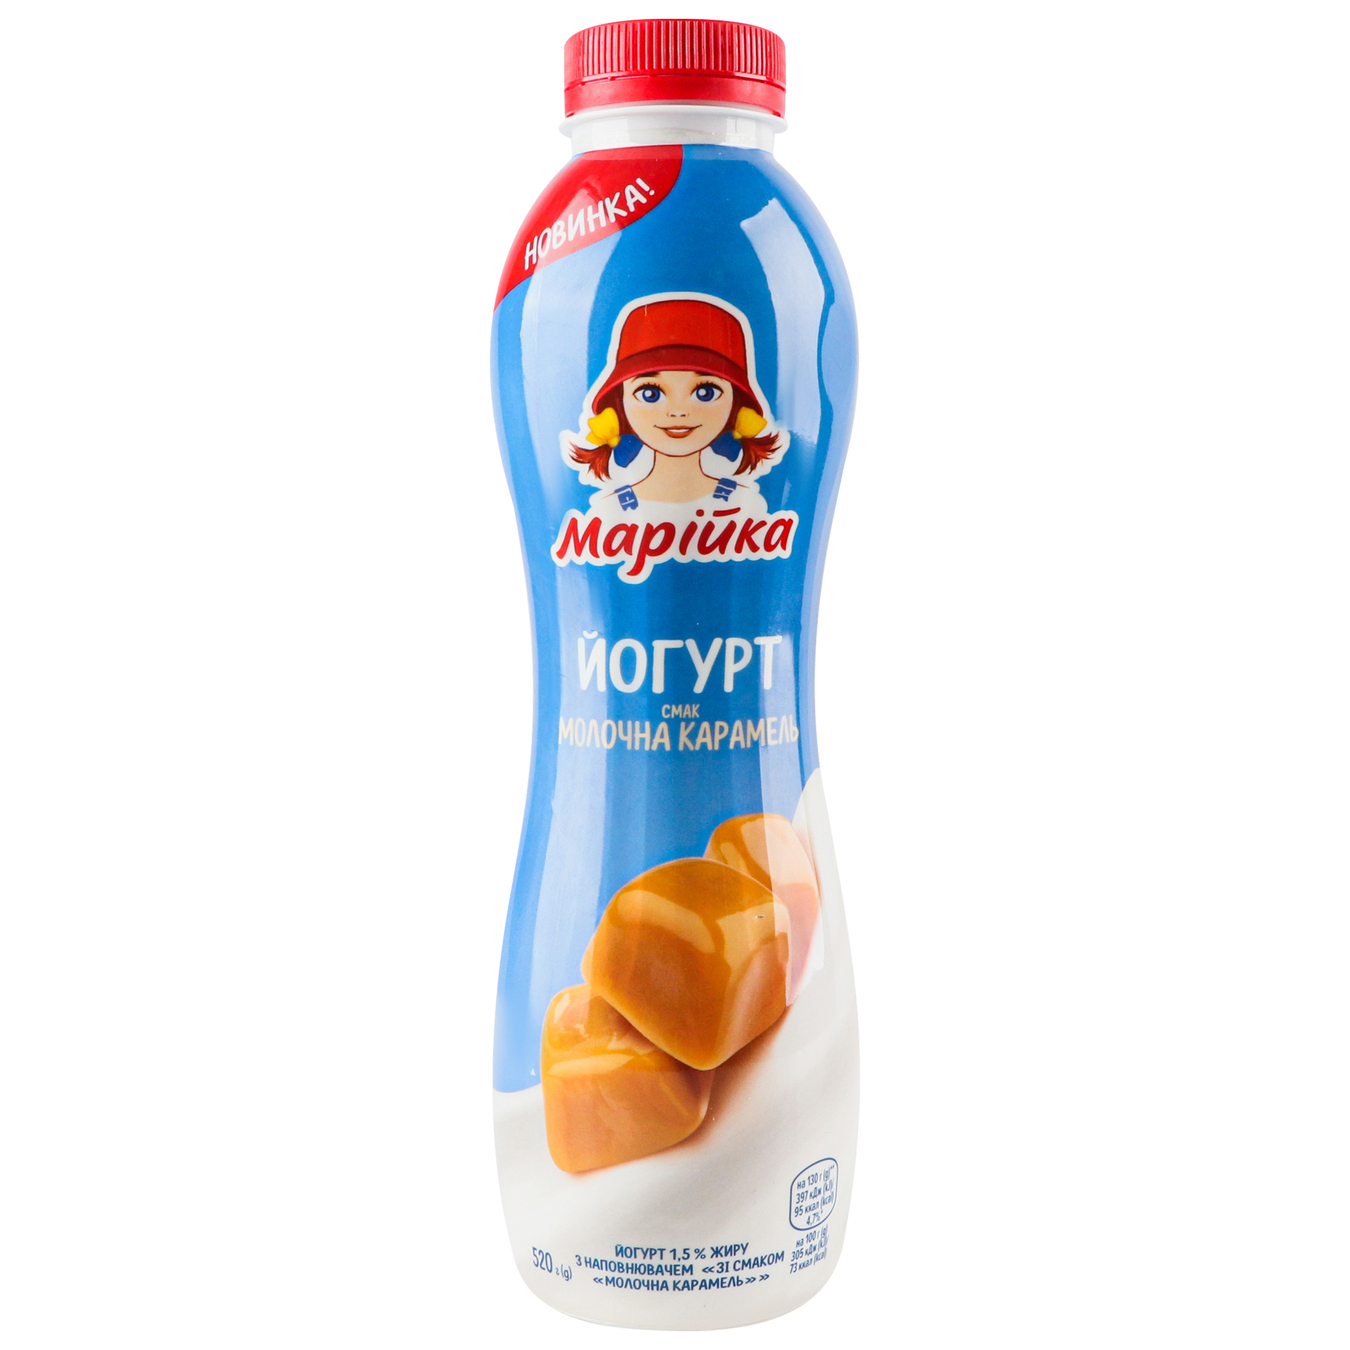 Mariyka drinking yogurt with milk caramel filling 1.5% PET bottle 520g